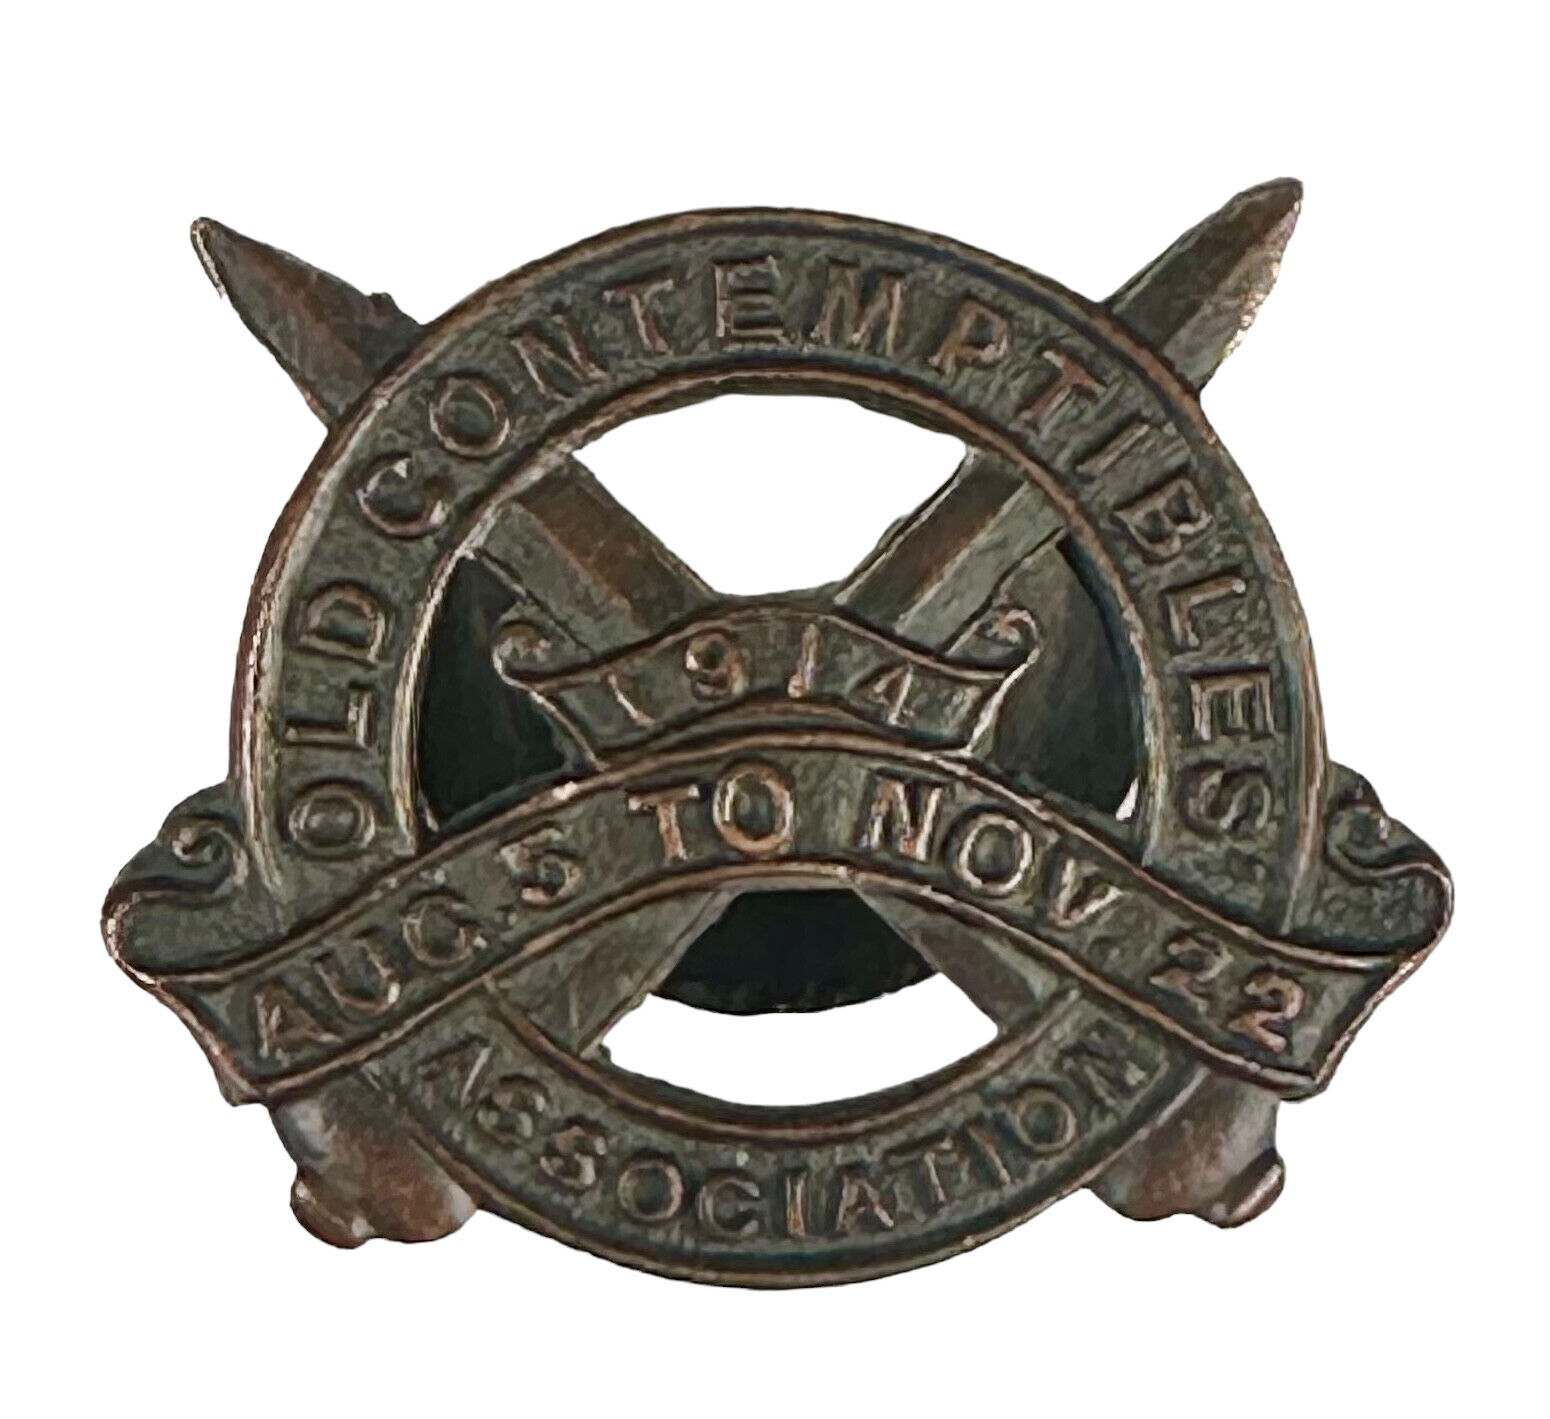 World War One 1914 August - November OId Contemtibles Association Lapel Badge